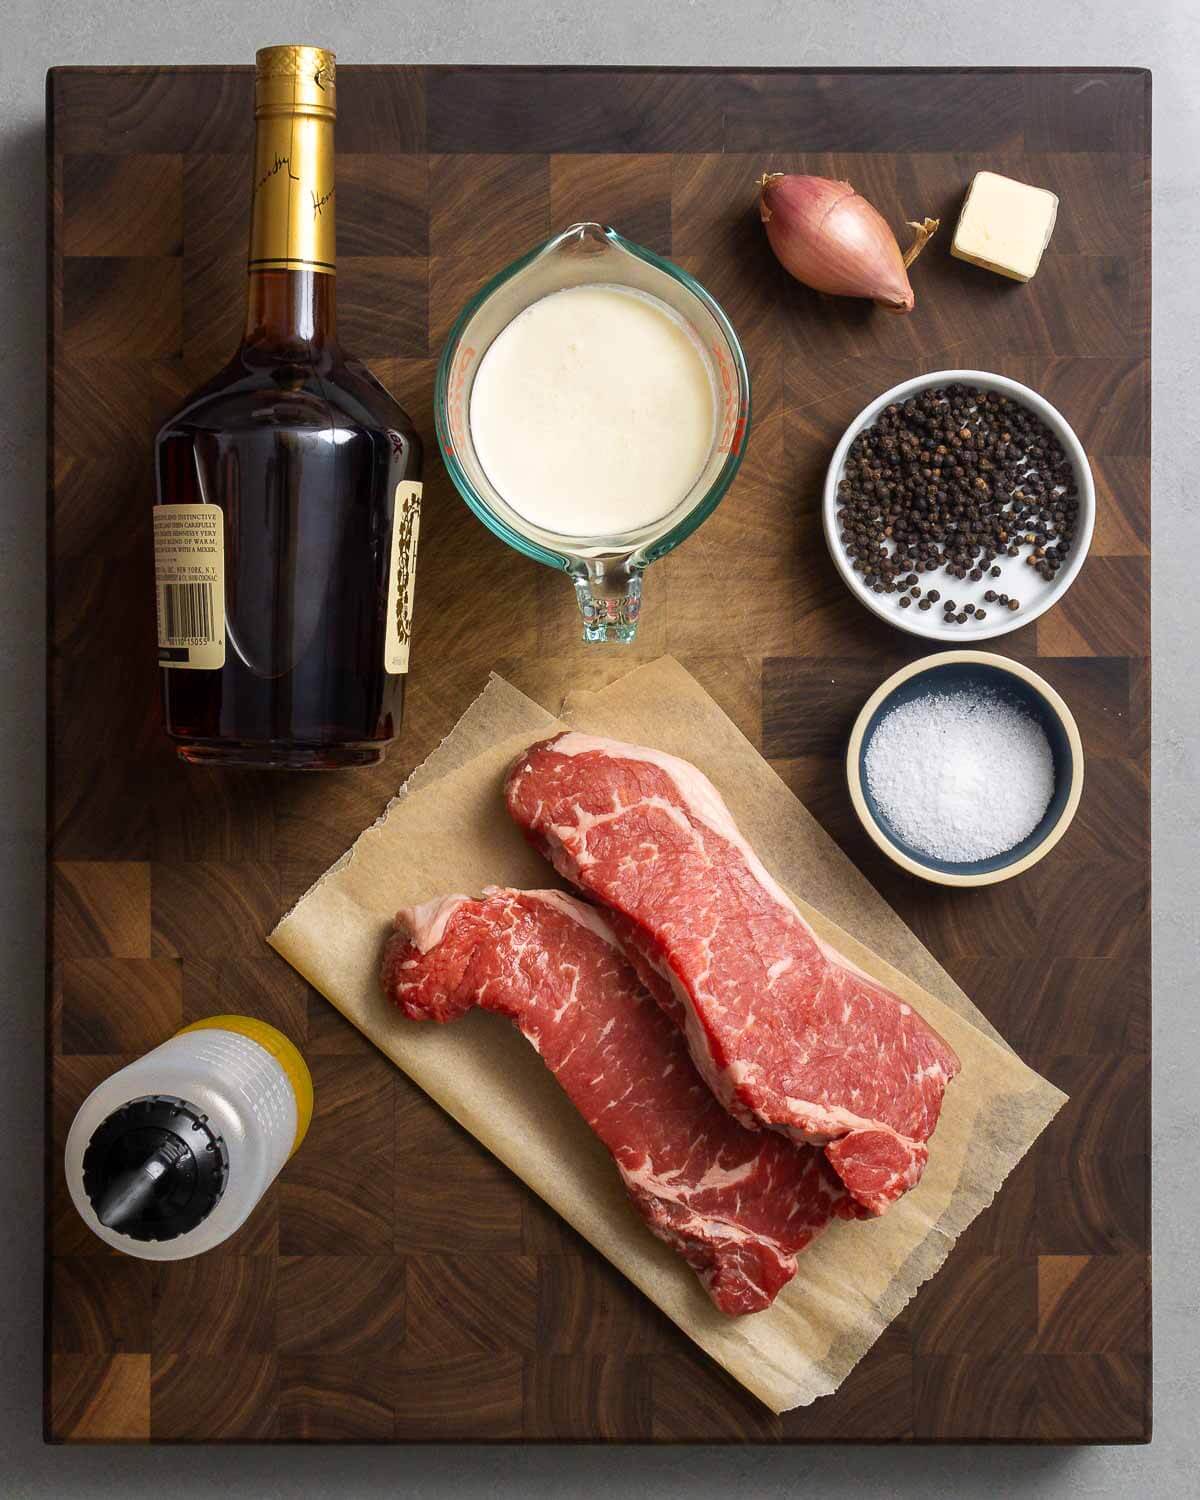 Ingredients shown: cognac, heavy cream, shallot, butter, peppercorns, salt, New York strip steaks, and olive oil.